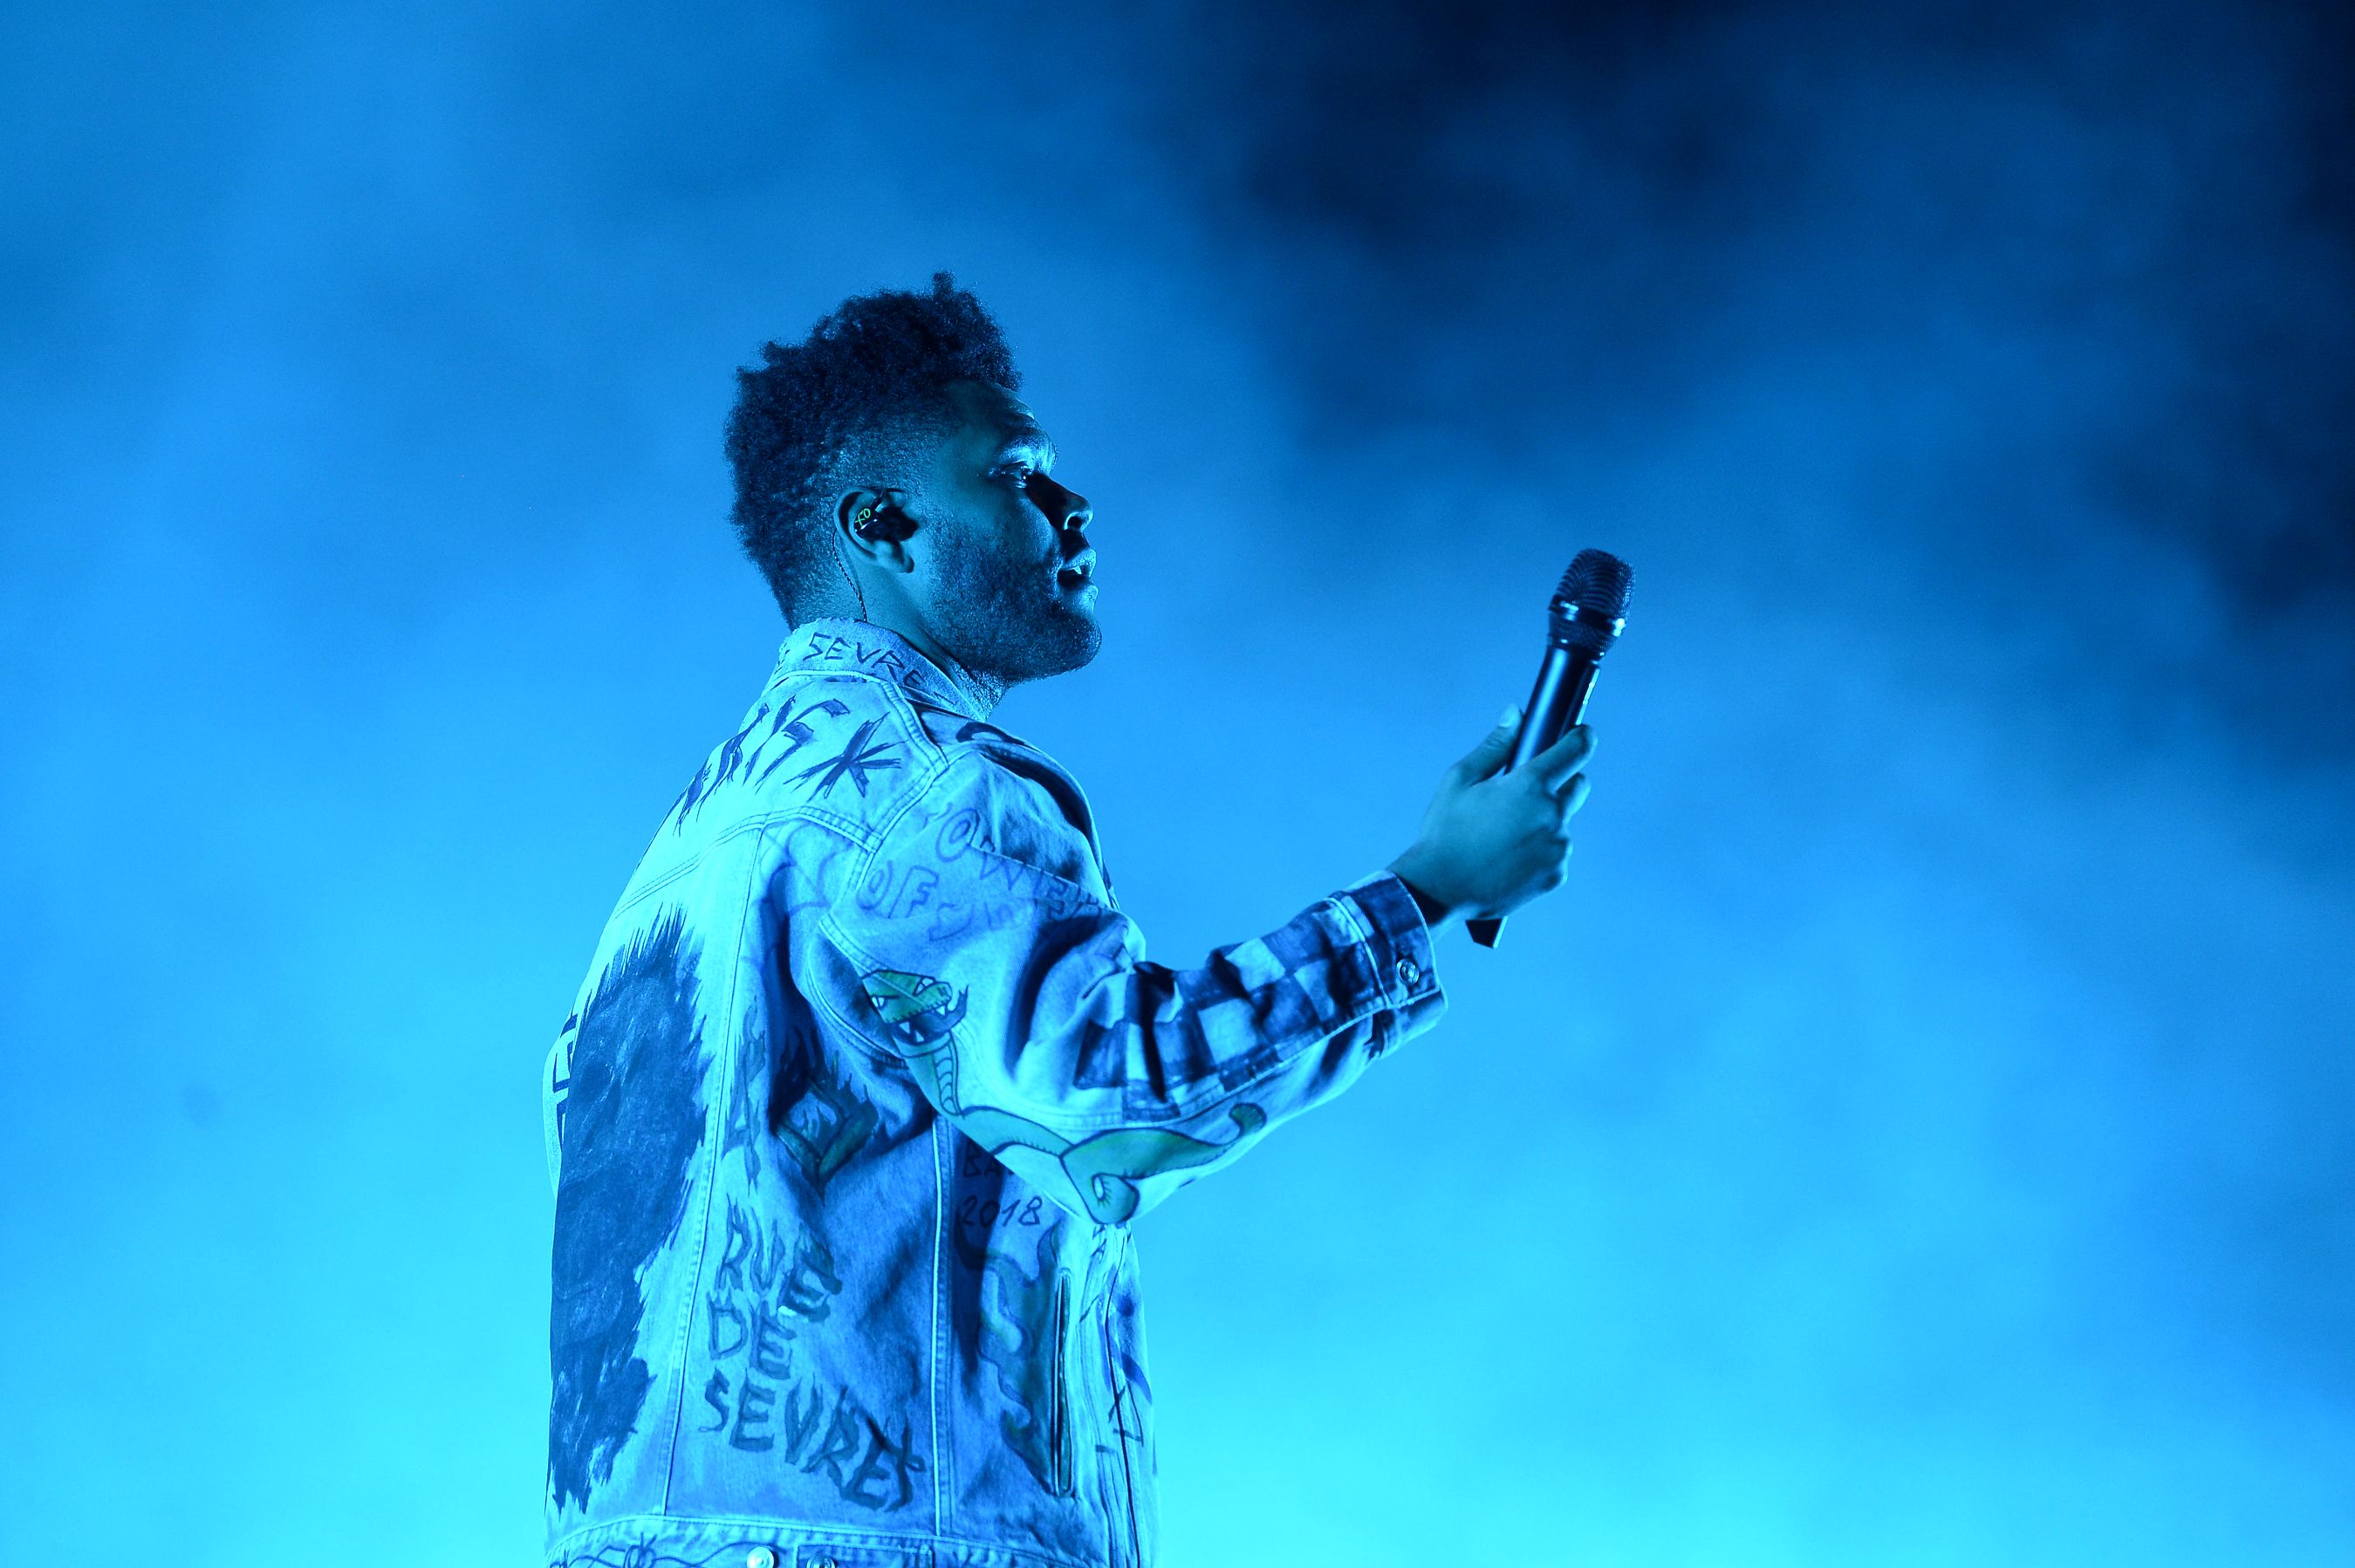 Pepsi Super Bowl LV Halftime Show: The Weeknd set to headline